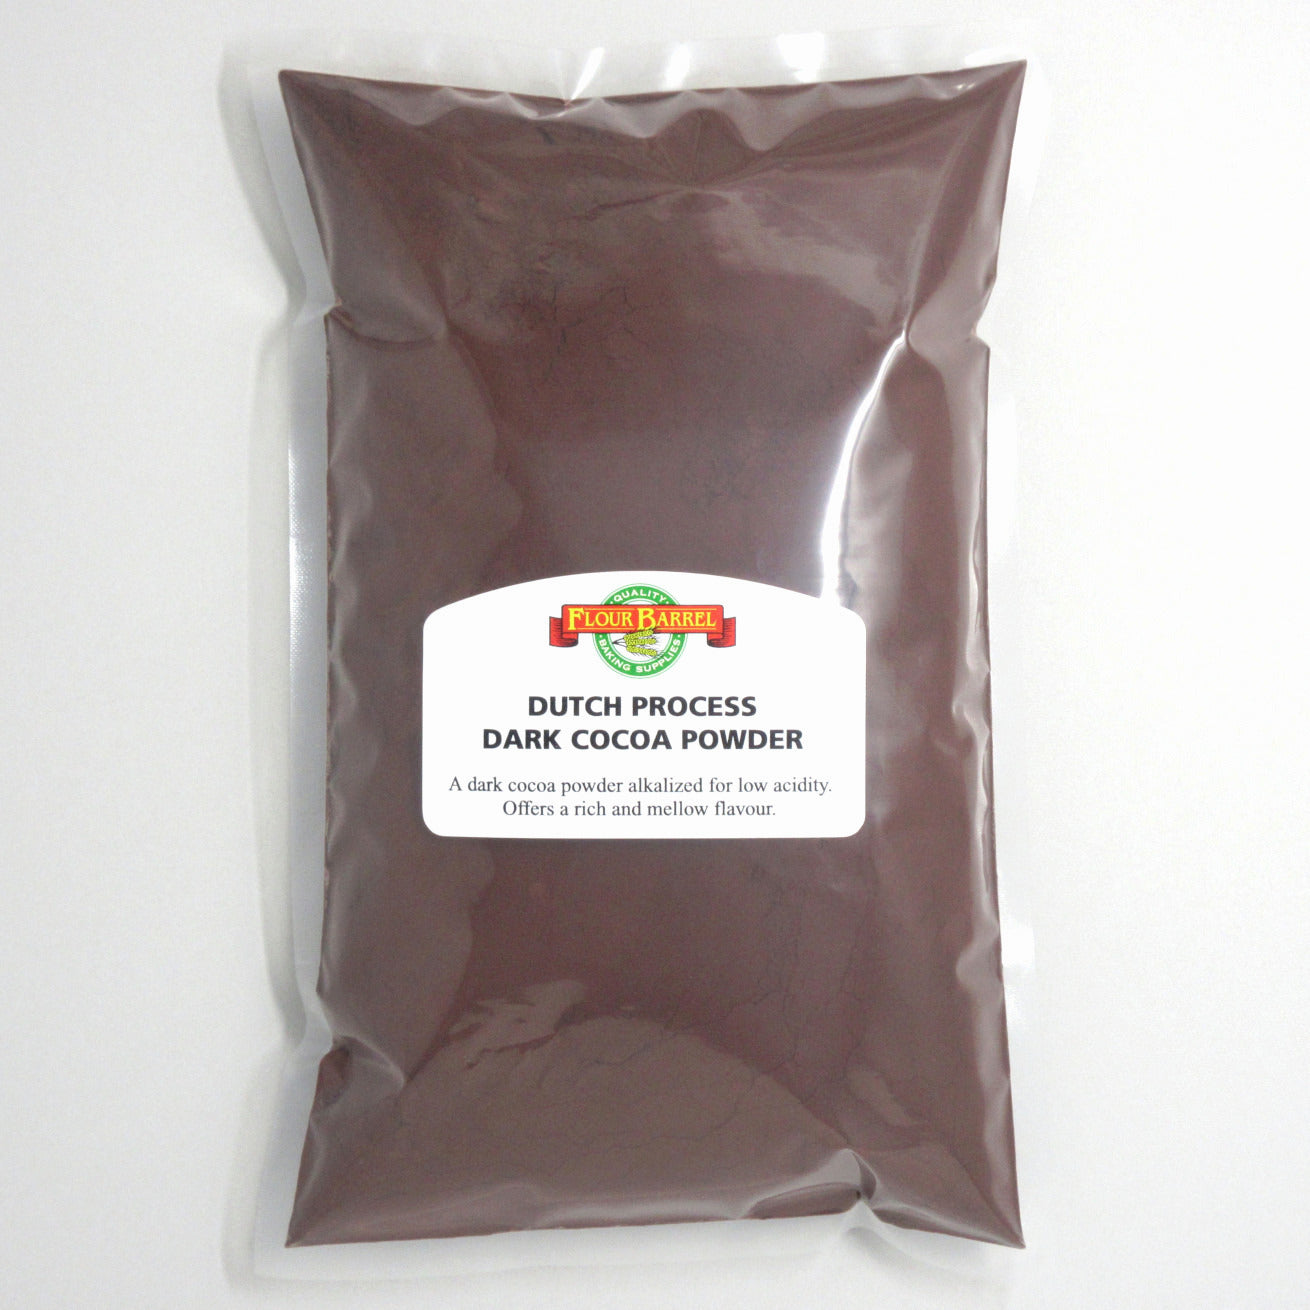 Flour Barrel product image - Dutch Process Dark Cocoa Powder